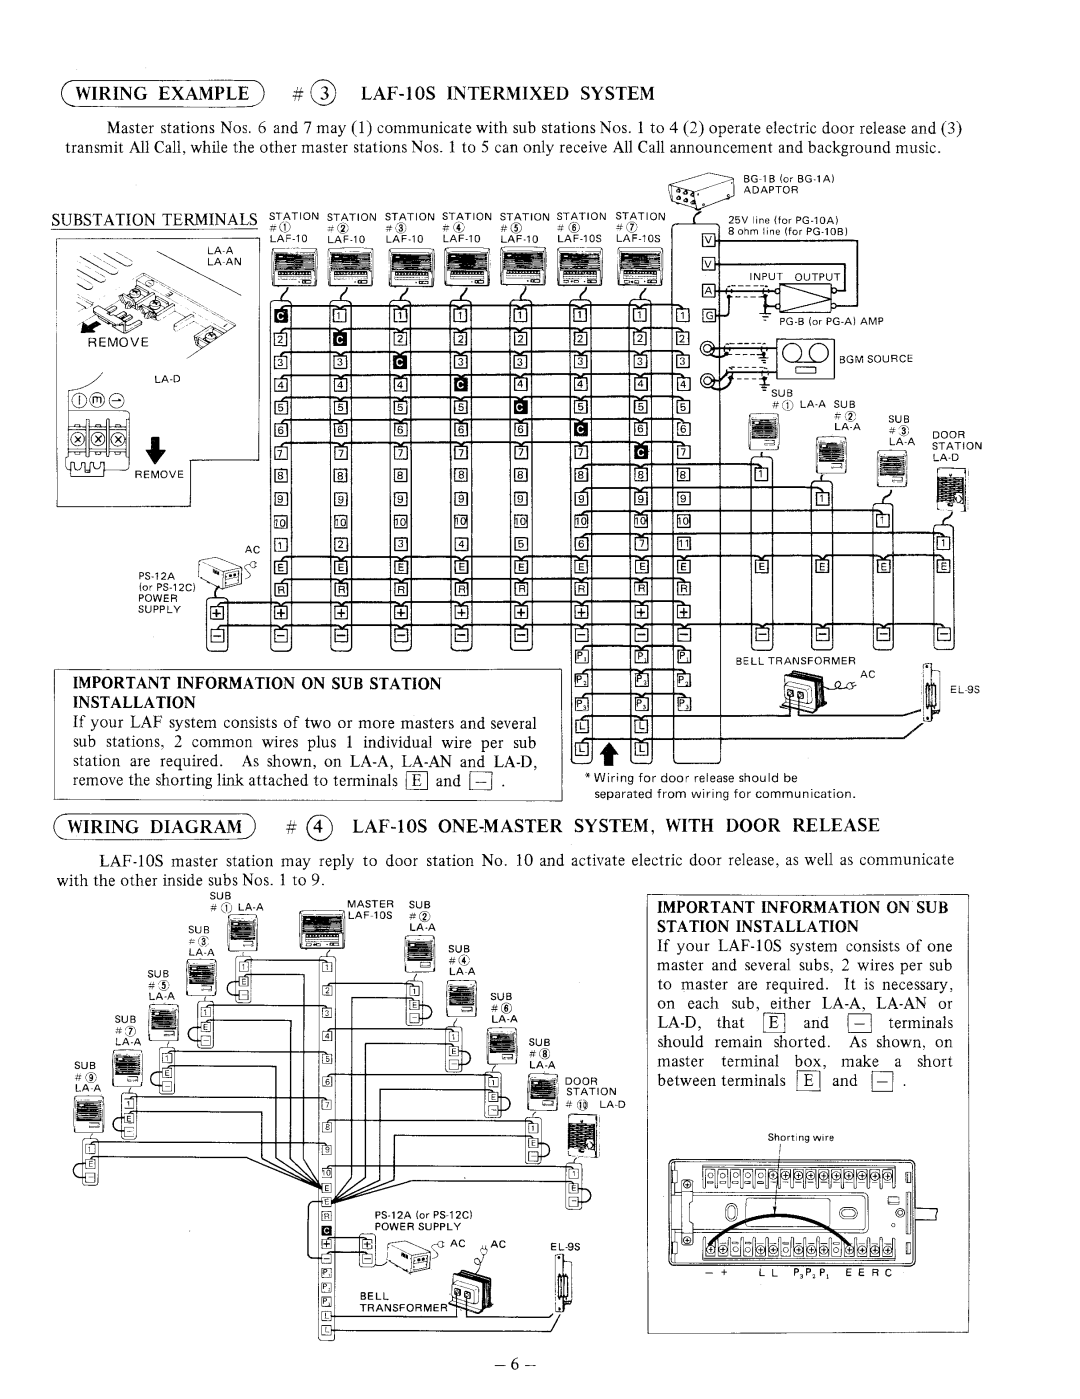 Aiphone LAF-10S manual 